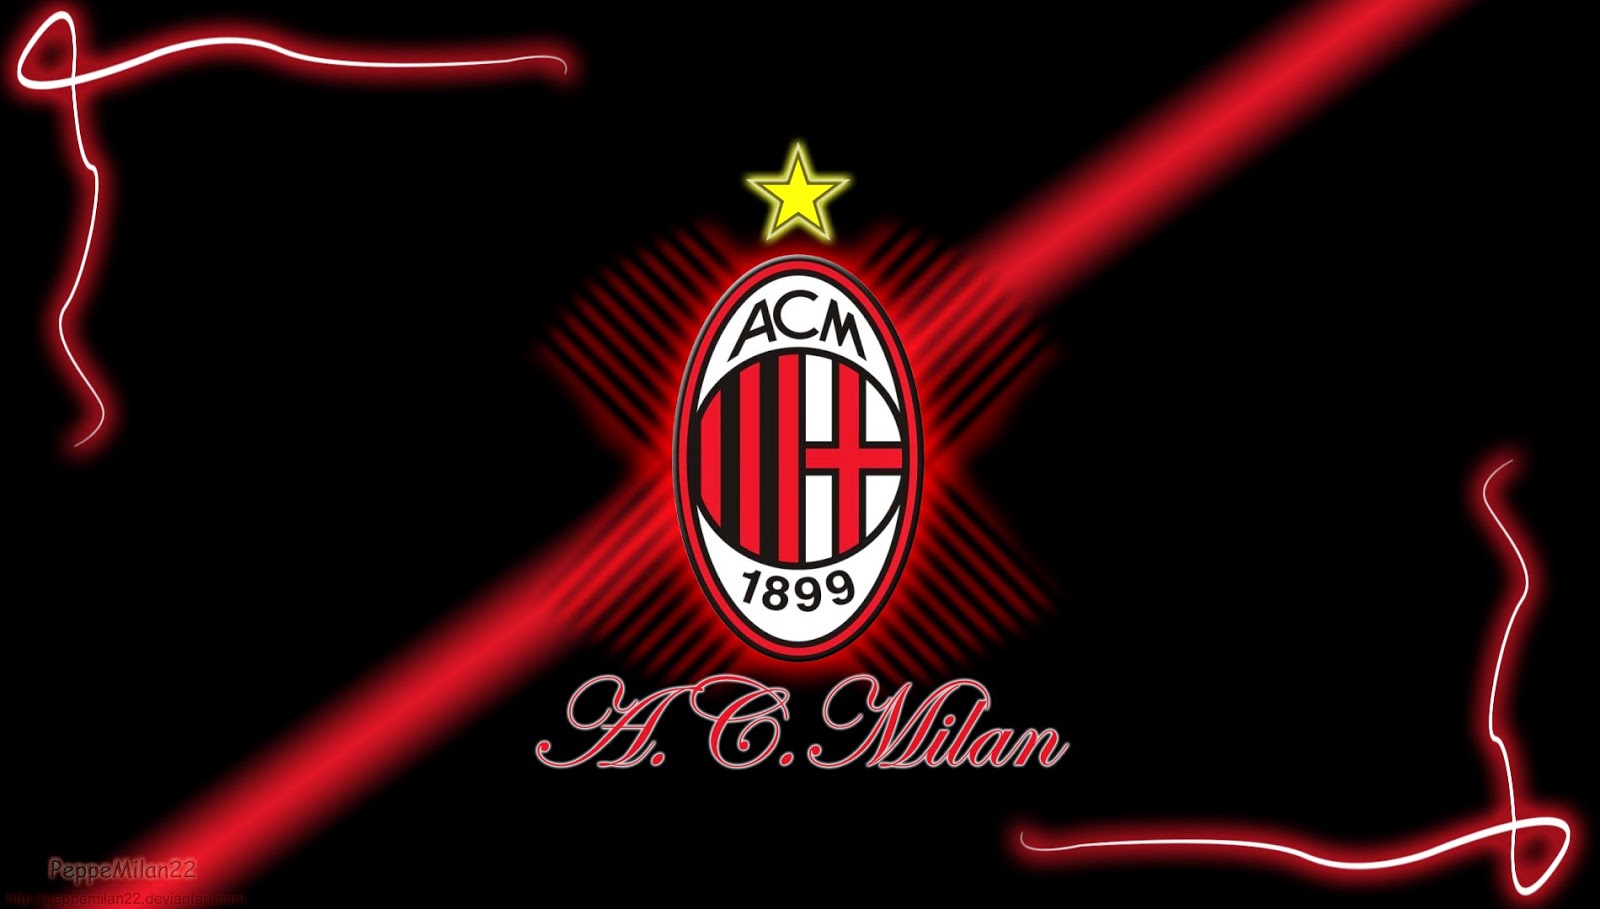 Wallpaper HD 2019 AC Milan Football Club Wallpaper